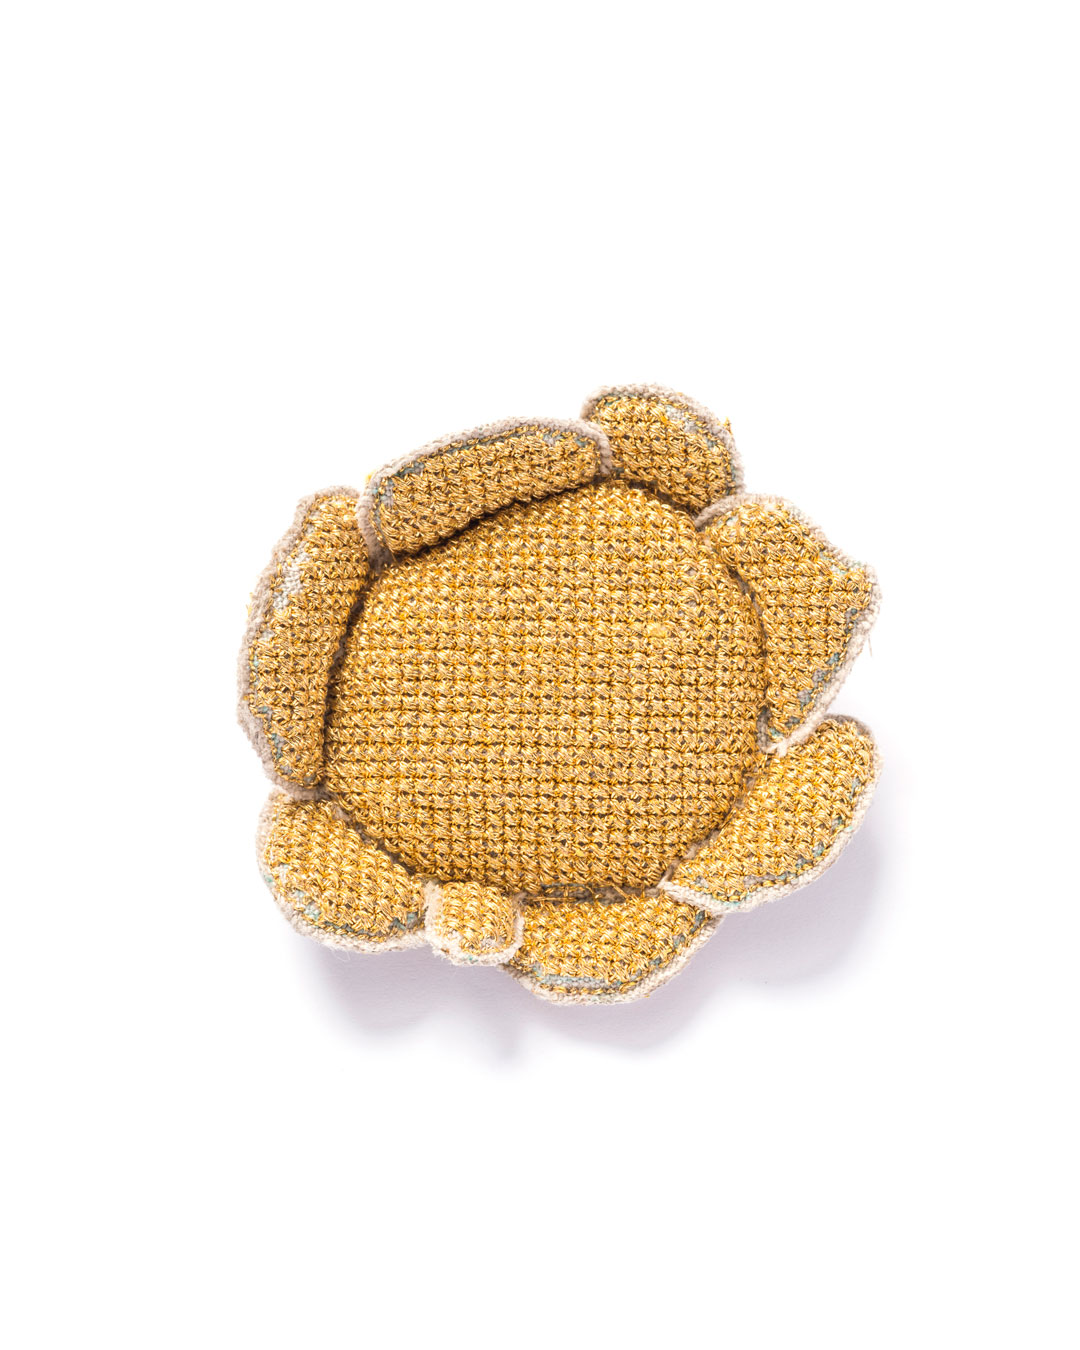 Carla Nuis, Golden Cuddles – Flower Brooch 5 (1/7), 2014, brooch; unbleached linen, 24ct gold kimono thread, linen flax fibres, 80 x 60 x 20 mm, €1530